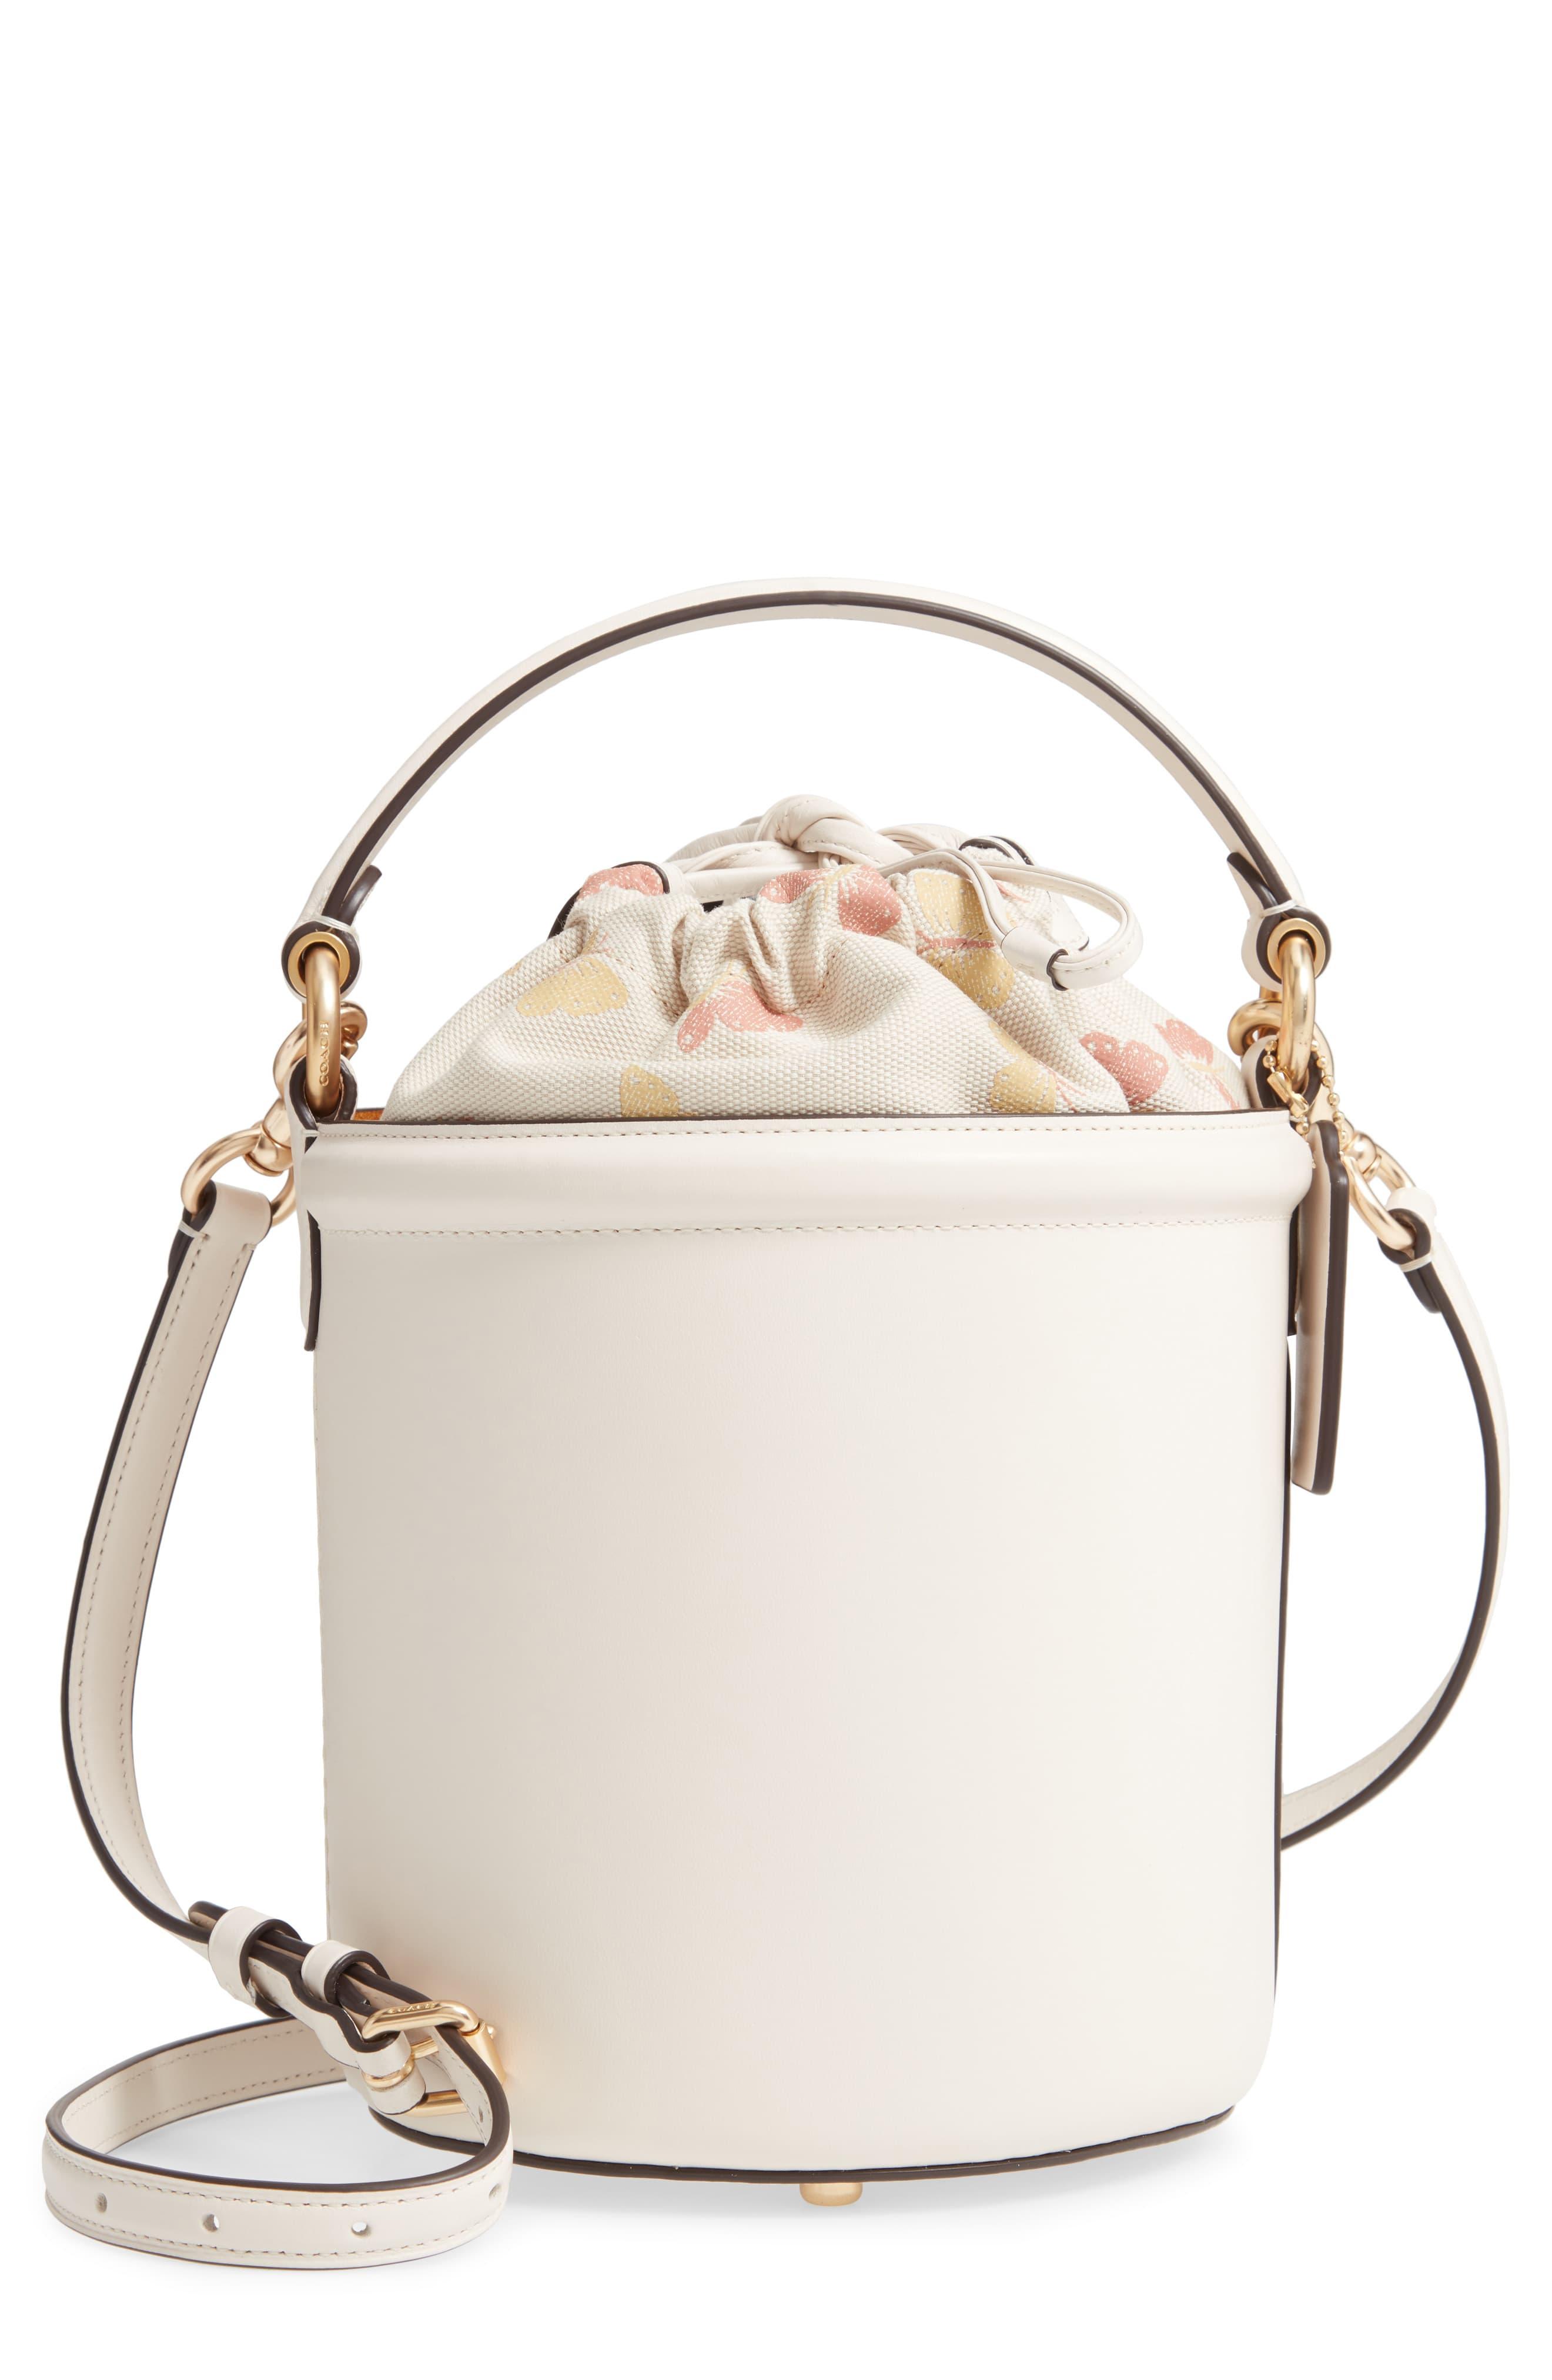 Coach Bucket Bag For Sale | SEMA Data Co-op